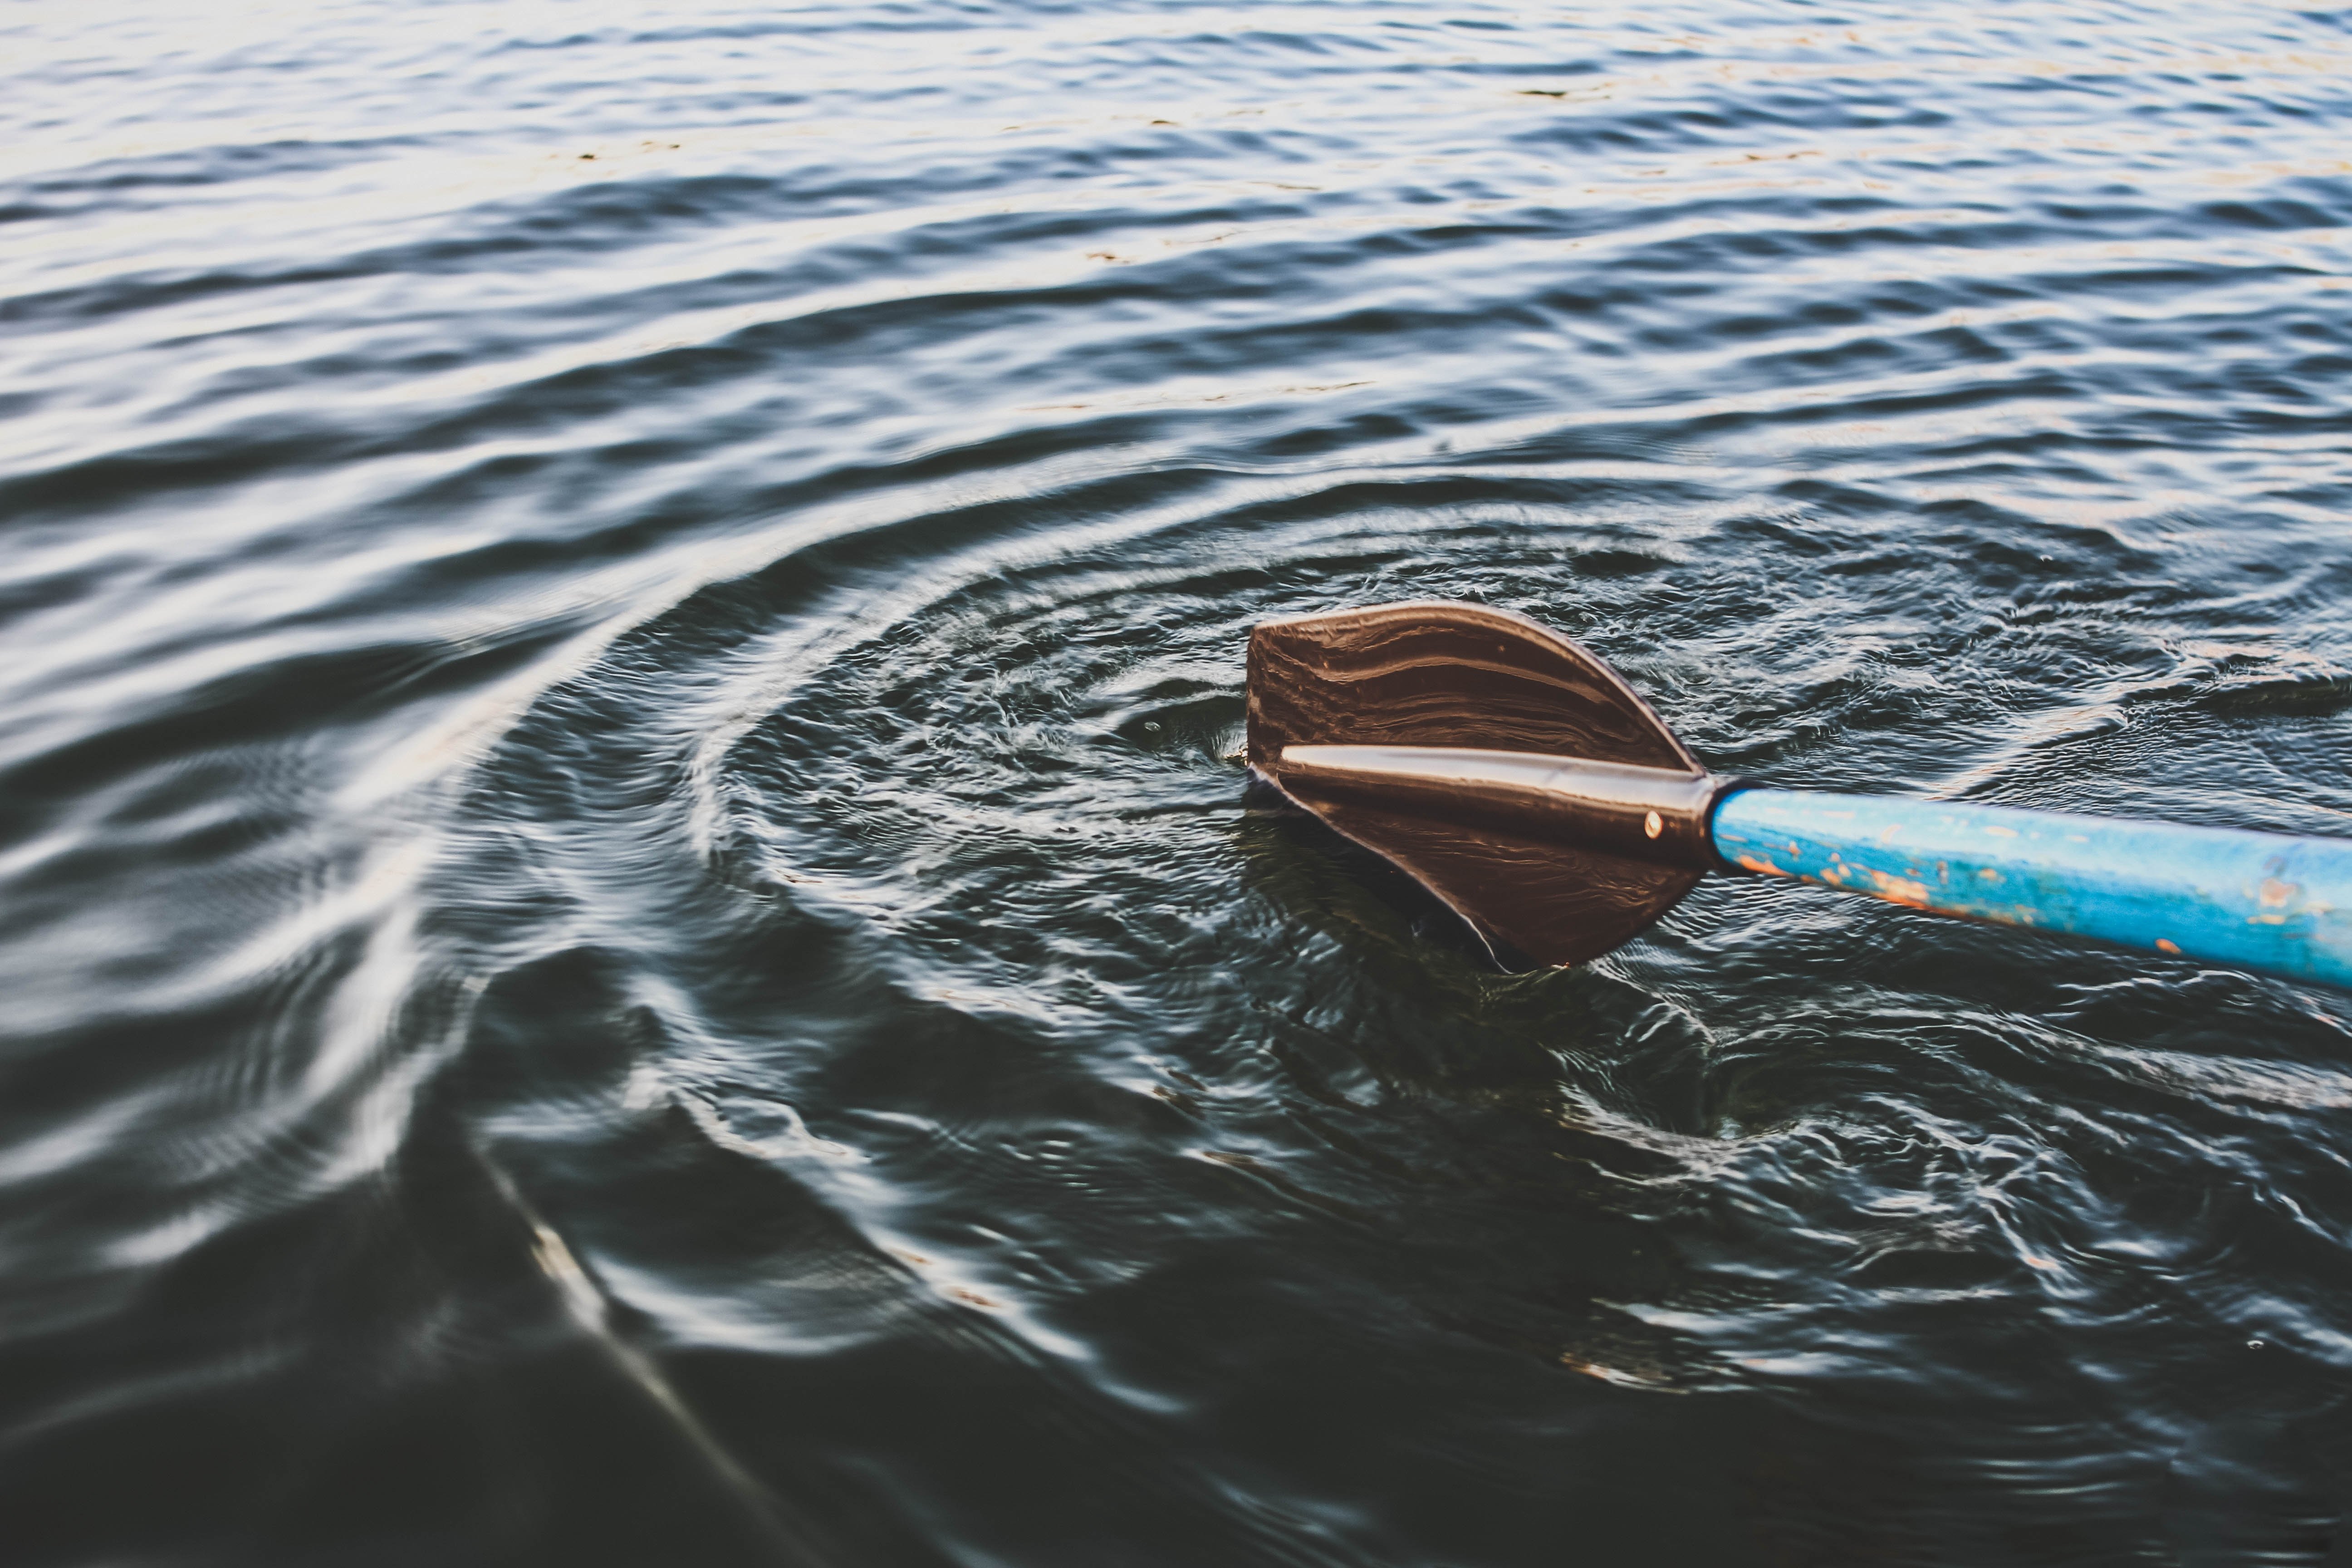 Движение весла. Весло в воде. Лодка с веслами. Весло от лодки. Лодка с веслами на воде.